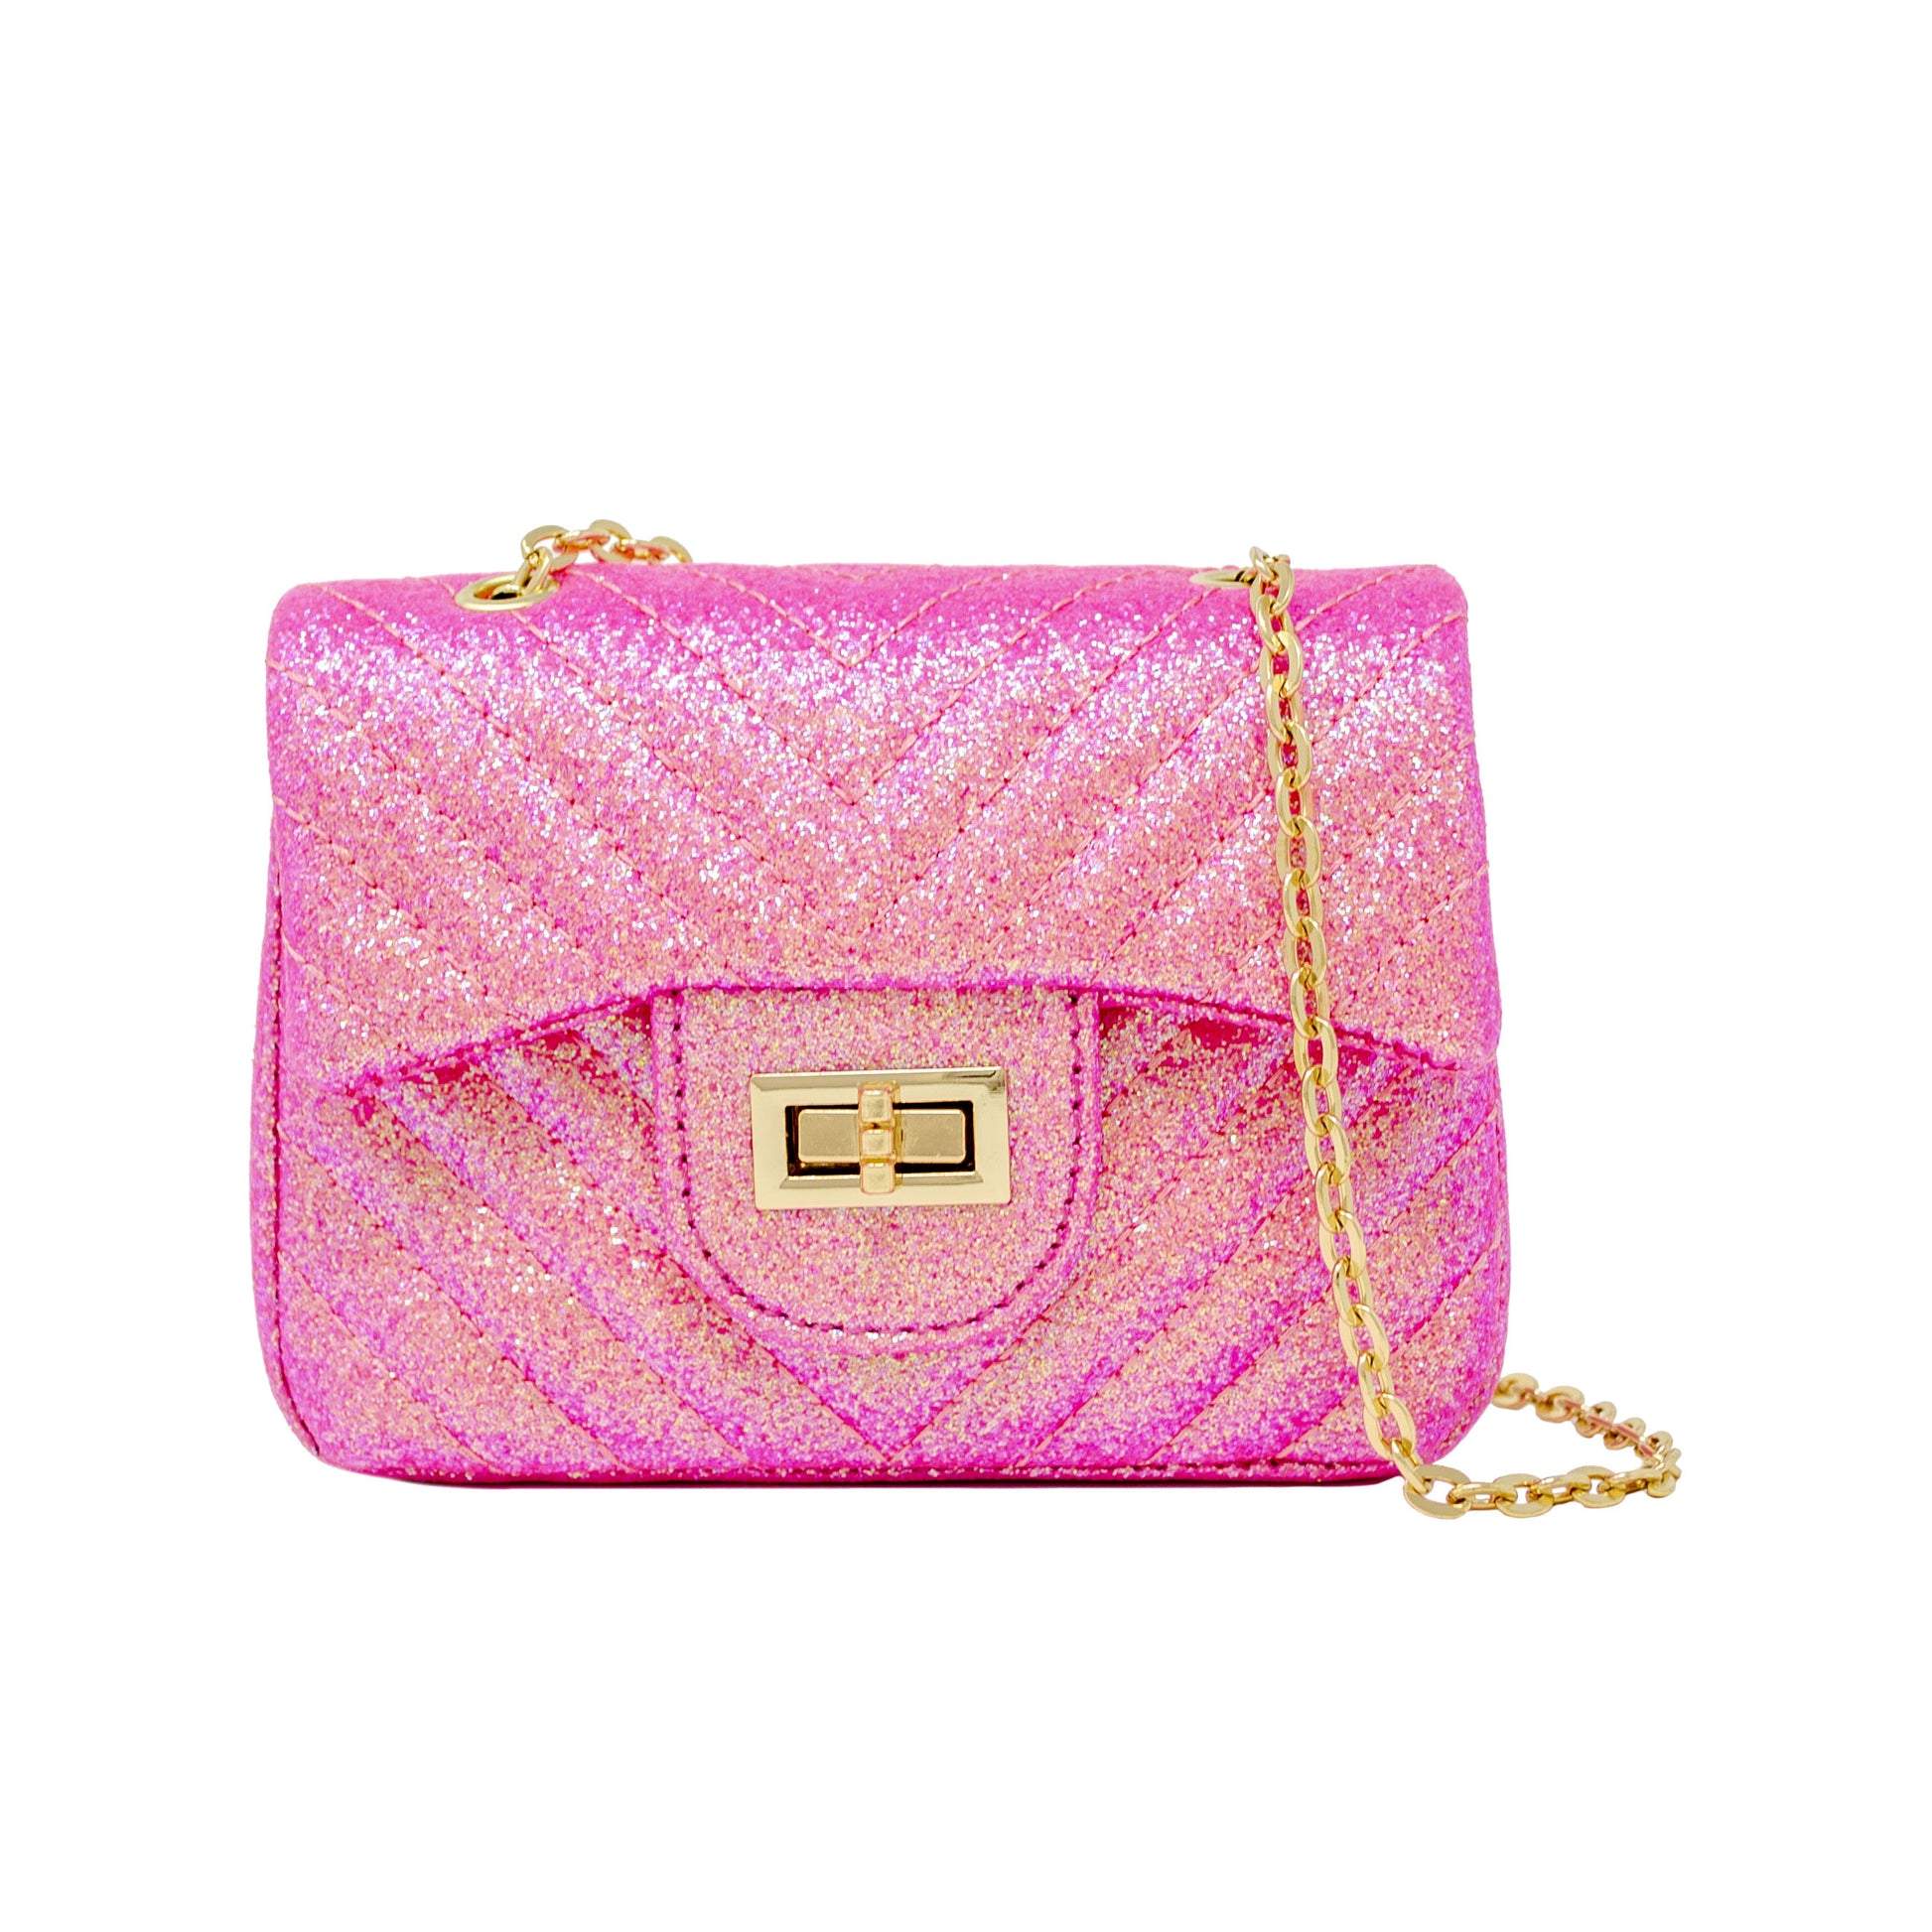 Pink Women Bags Purses Handbags - Buy Pink Women Bags Purses Handbags  online in India